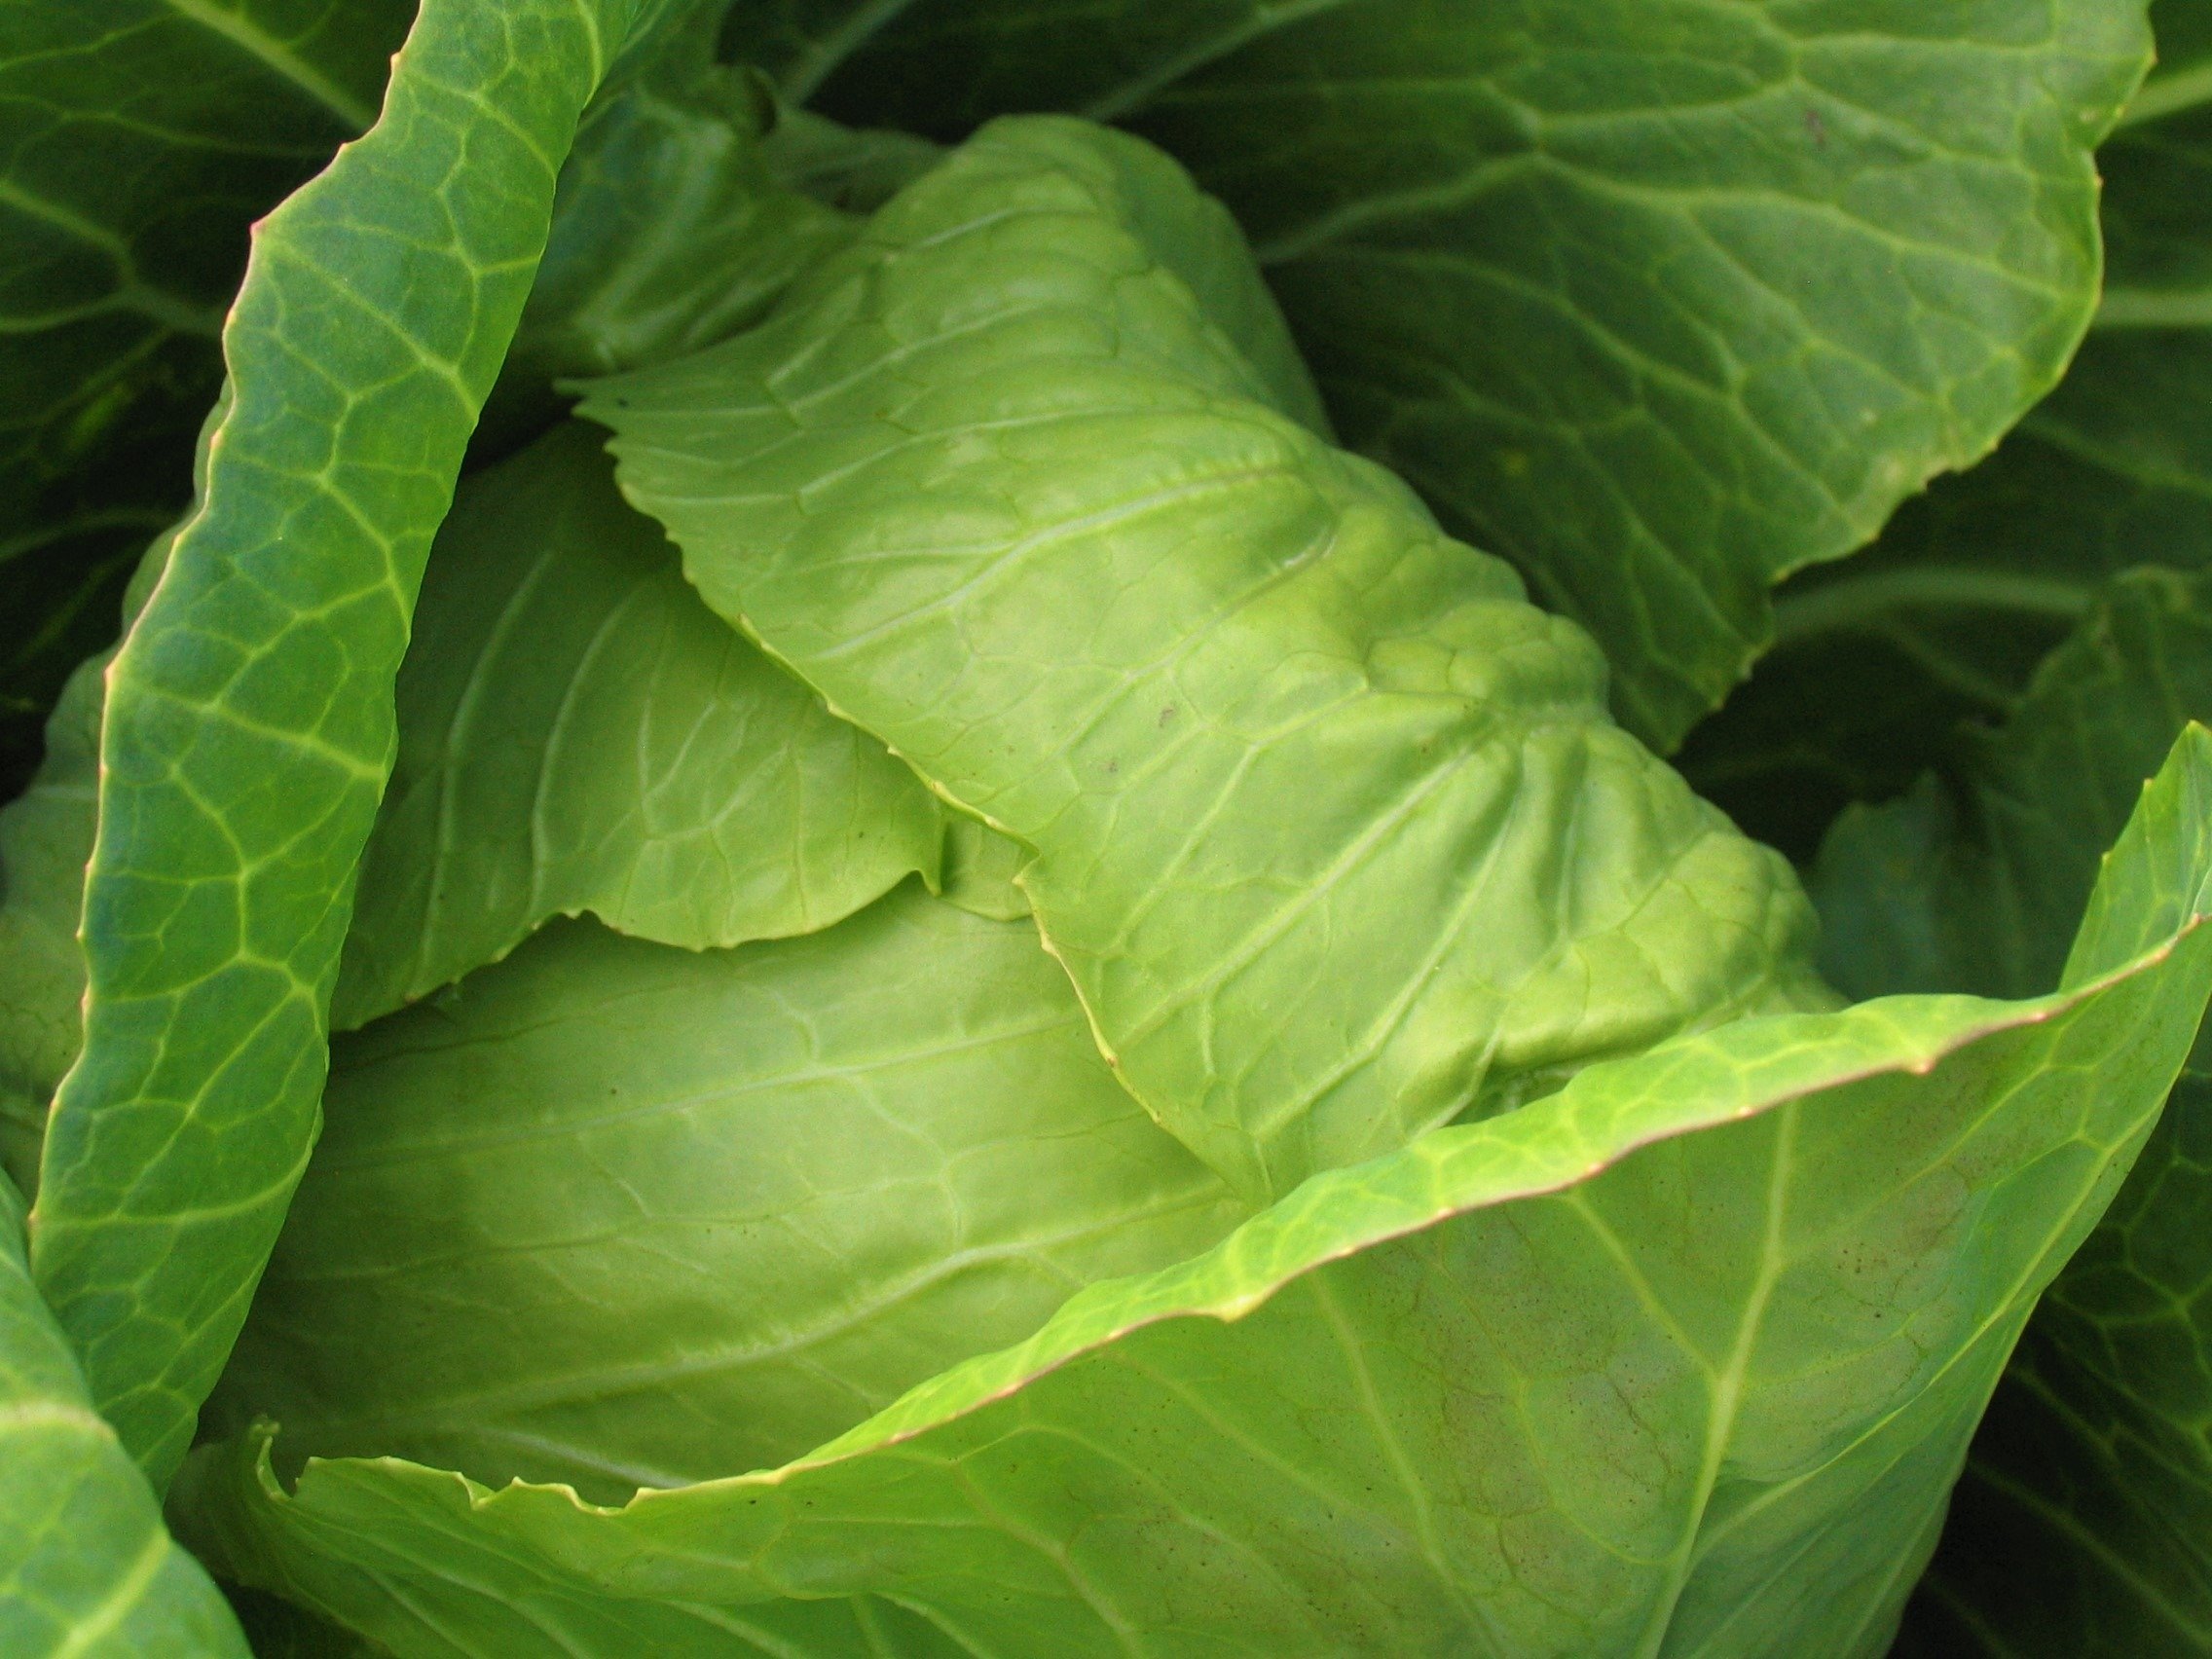 Alaska grown cabbage